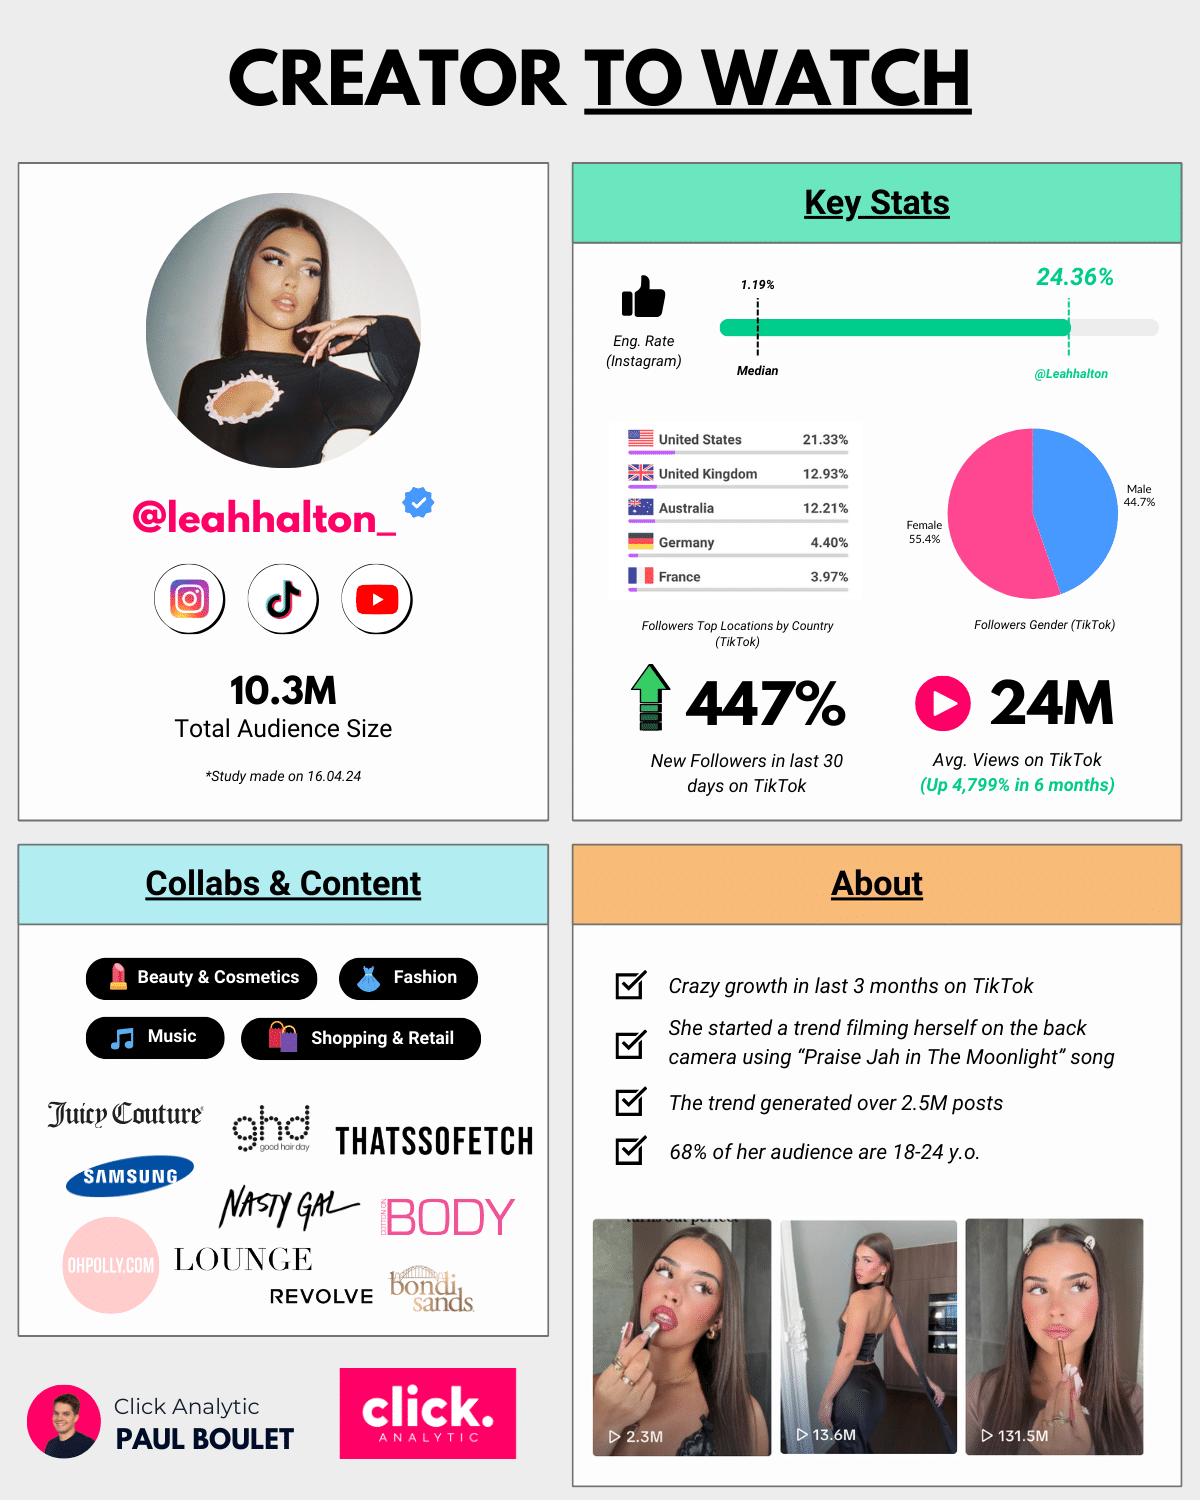 An infographic showcasing social media influencer leah halton's key metrics, including follower demographics, content categories, and engagement statistics.